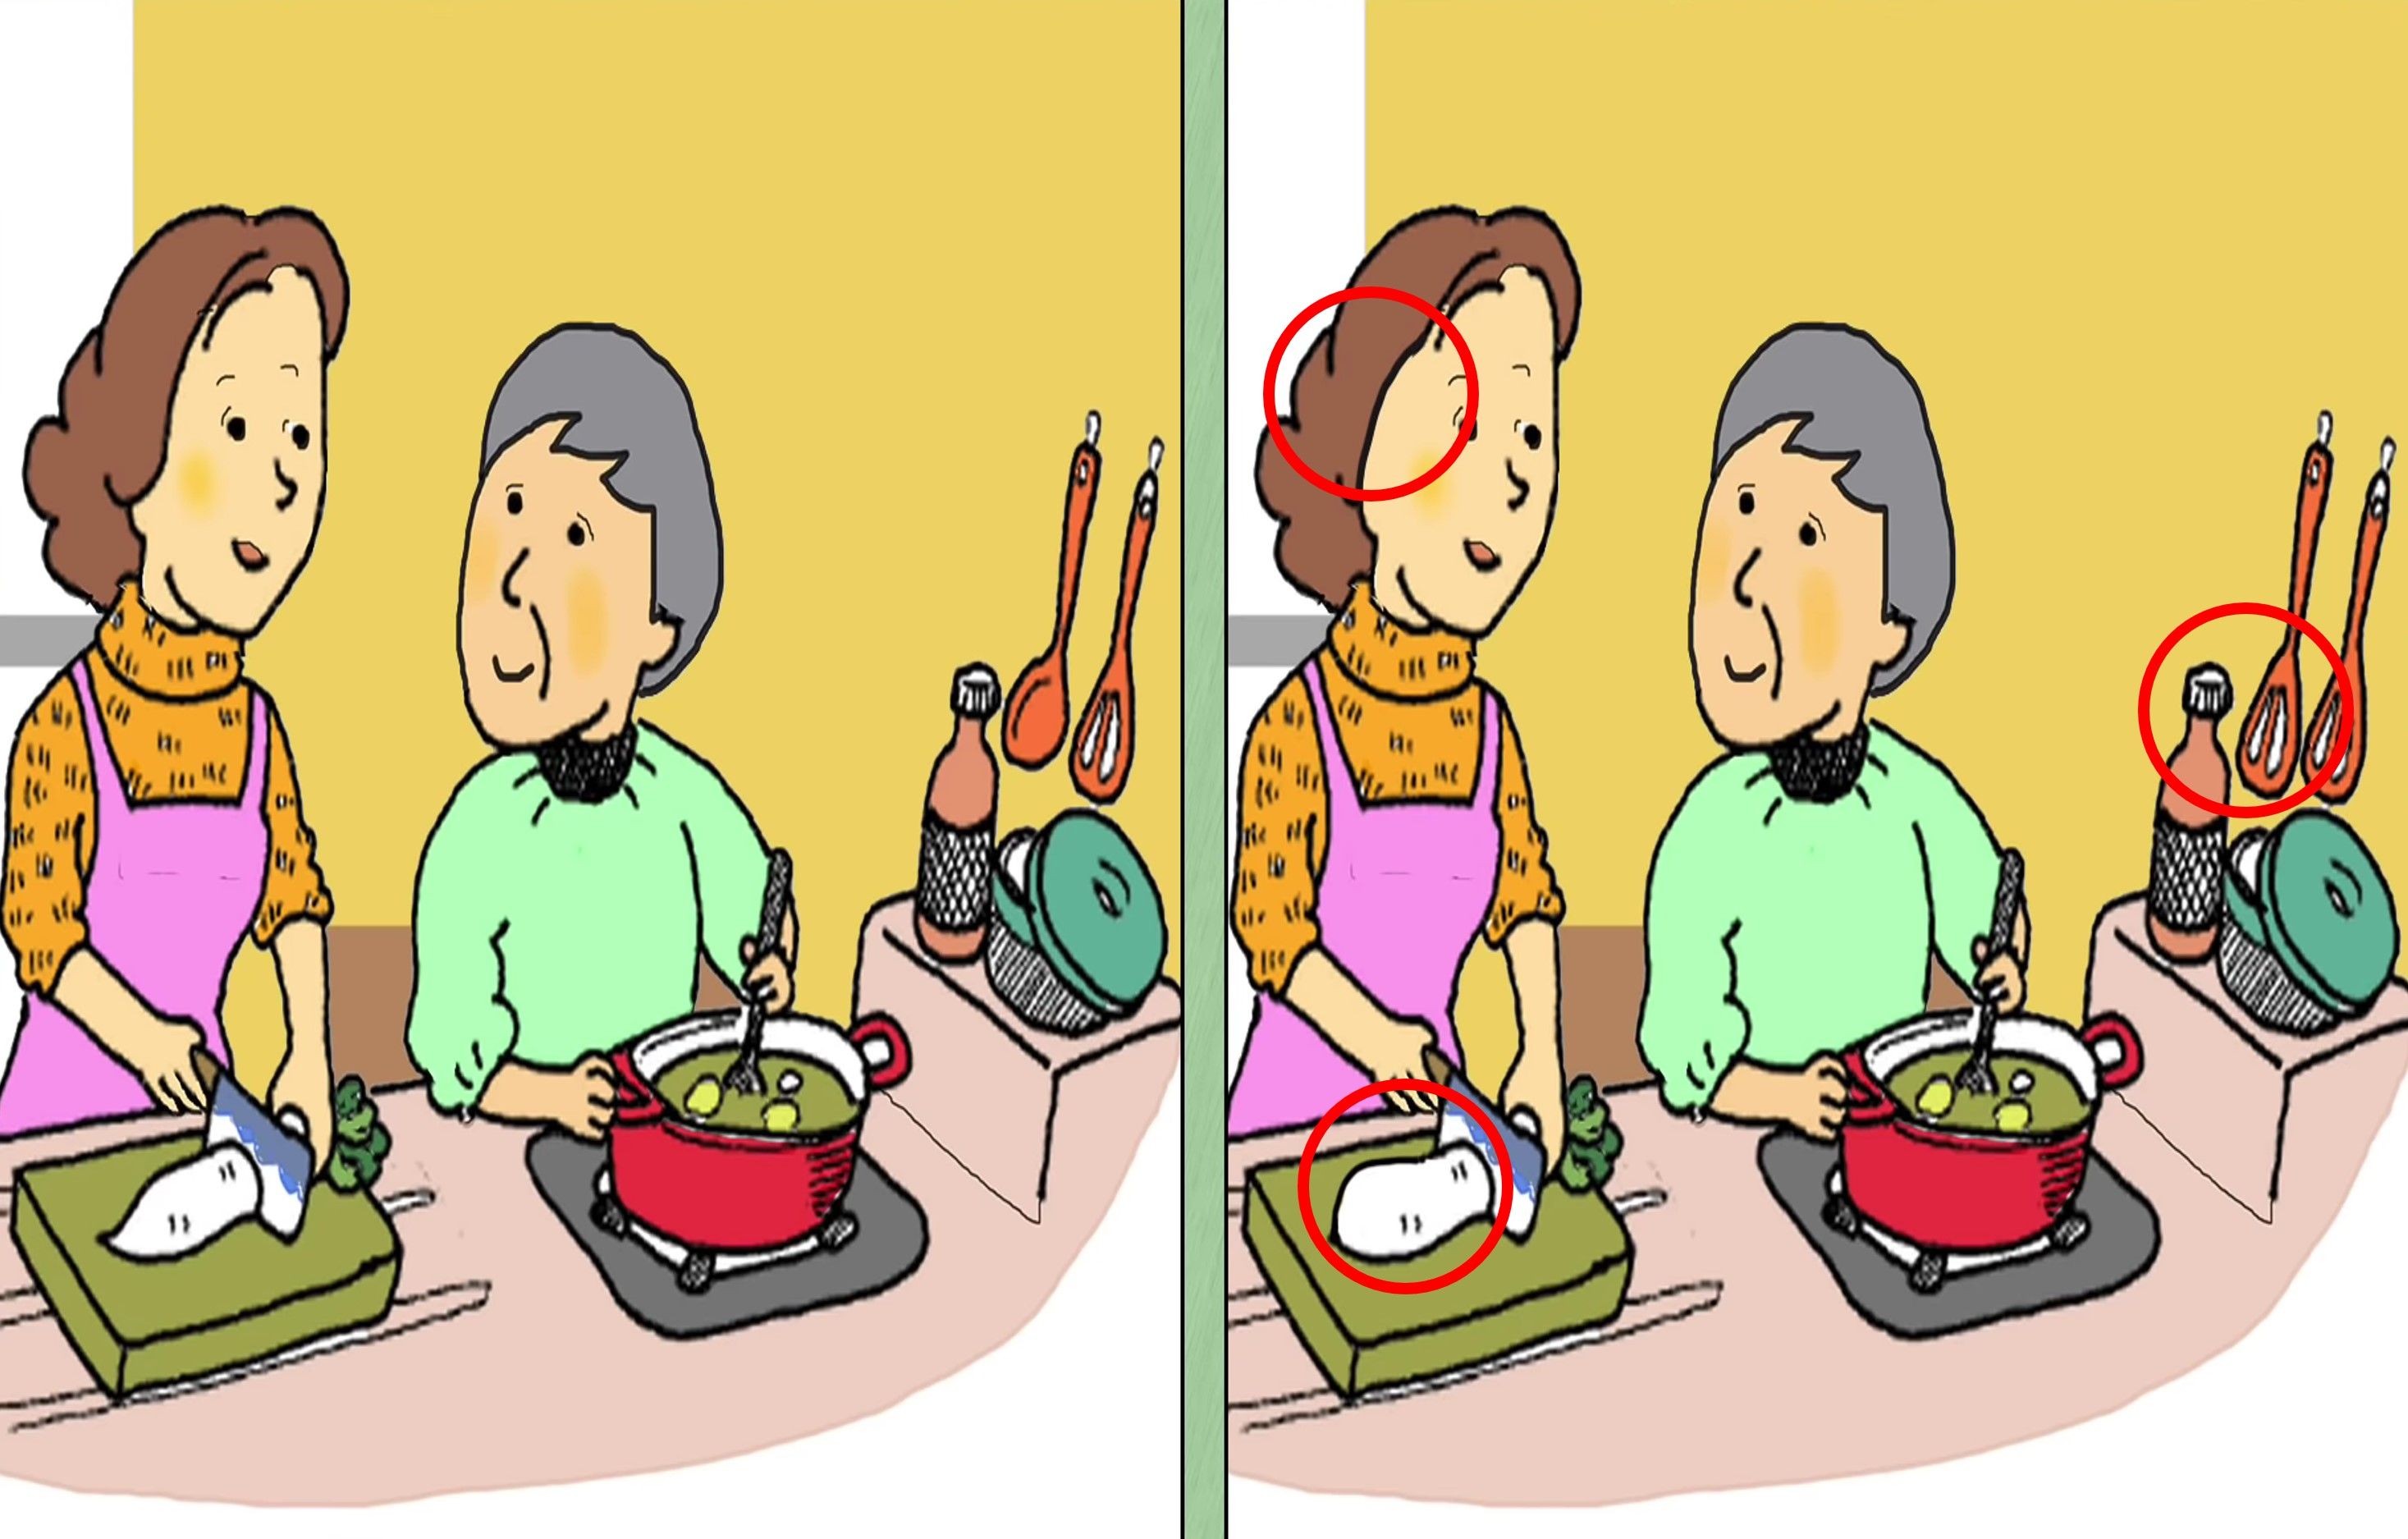 Ini letak 3 perbedaan pada gambar ibu-ibu memasak.*